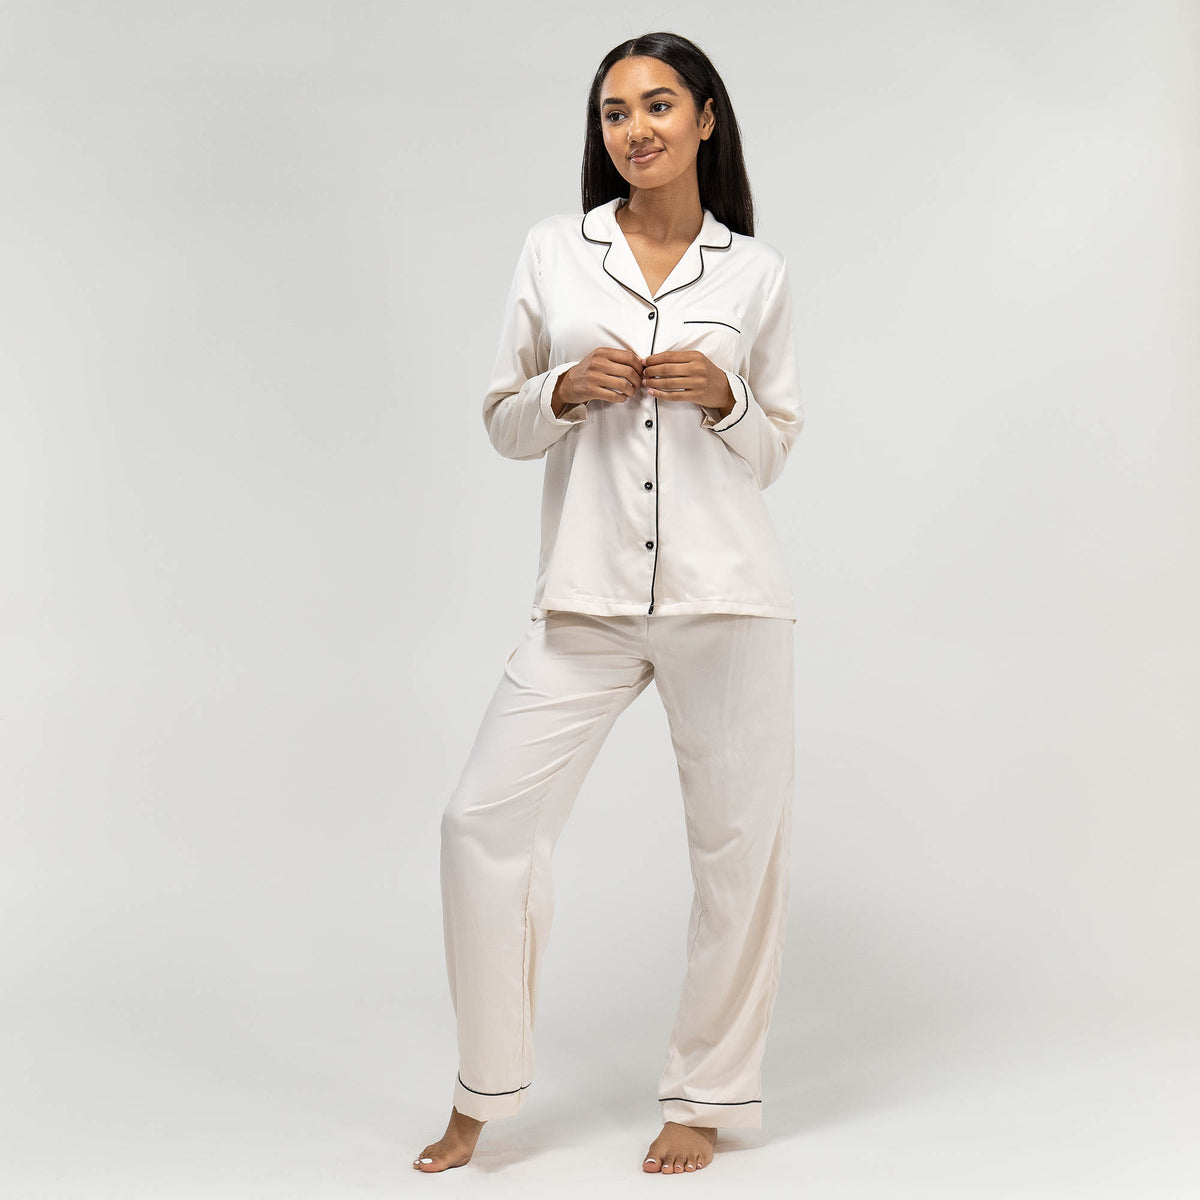 Women's Pyjamas, Cotton & Silk Sets